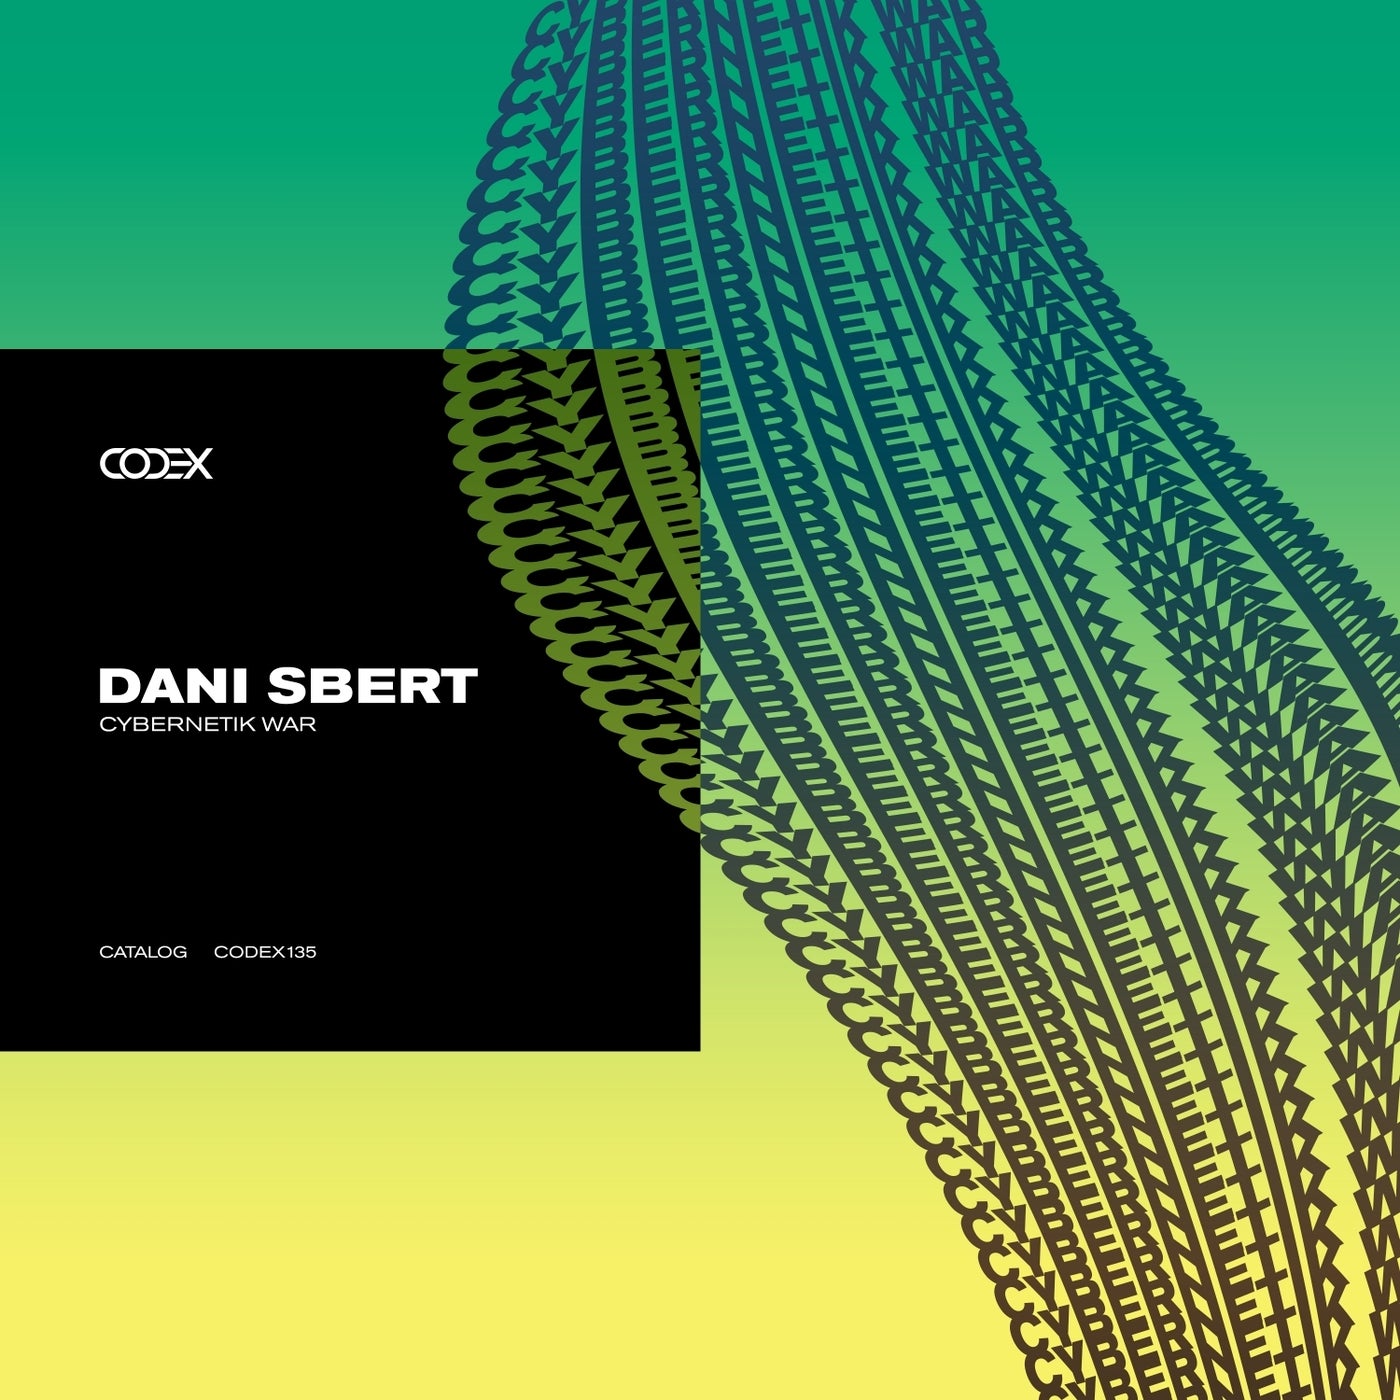 image cover: Dani Sbert - Cybernetik War / CODEX135